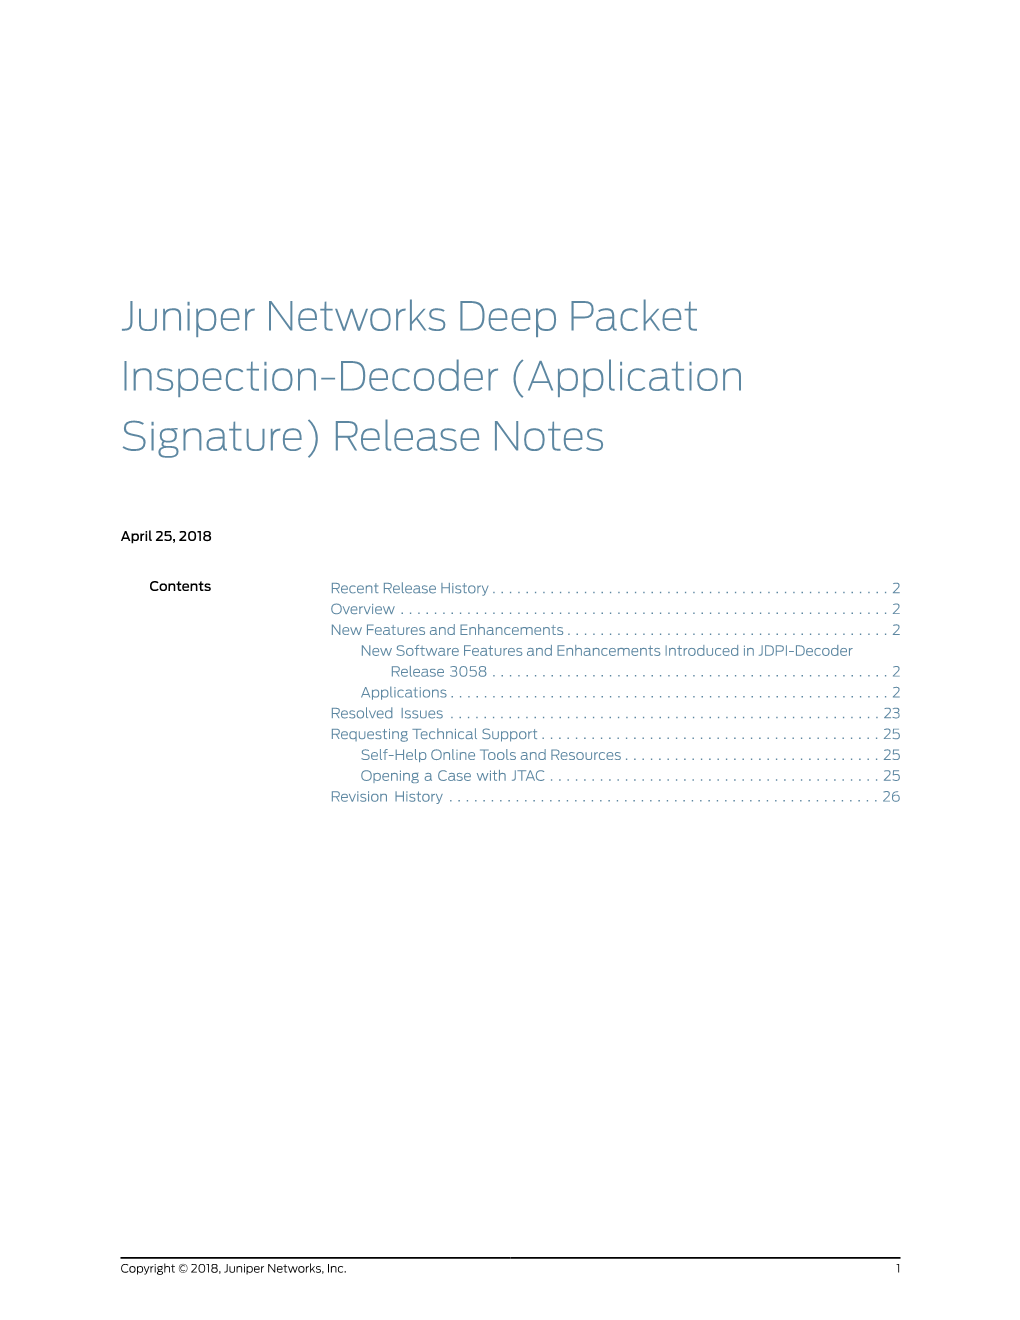 Juniper Networks Deep Packet Inspection-Decoder (Application Signature) Release Notes